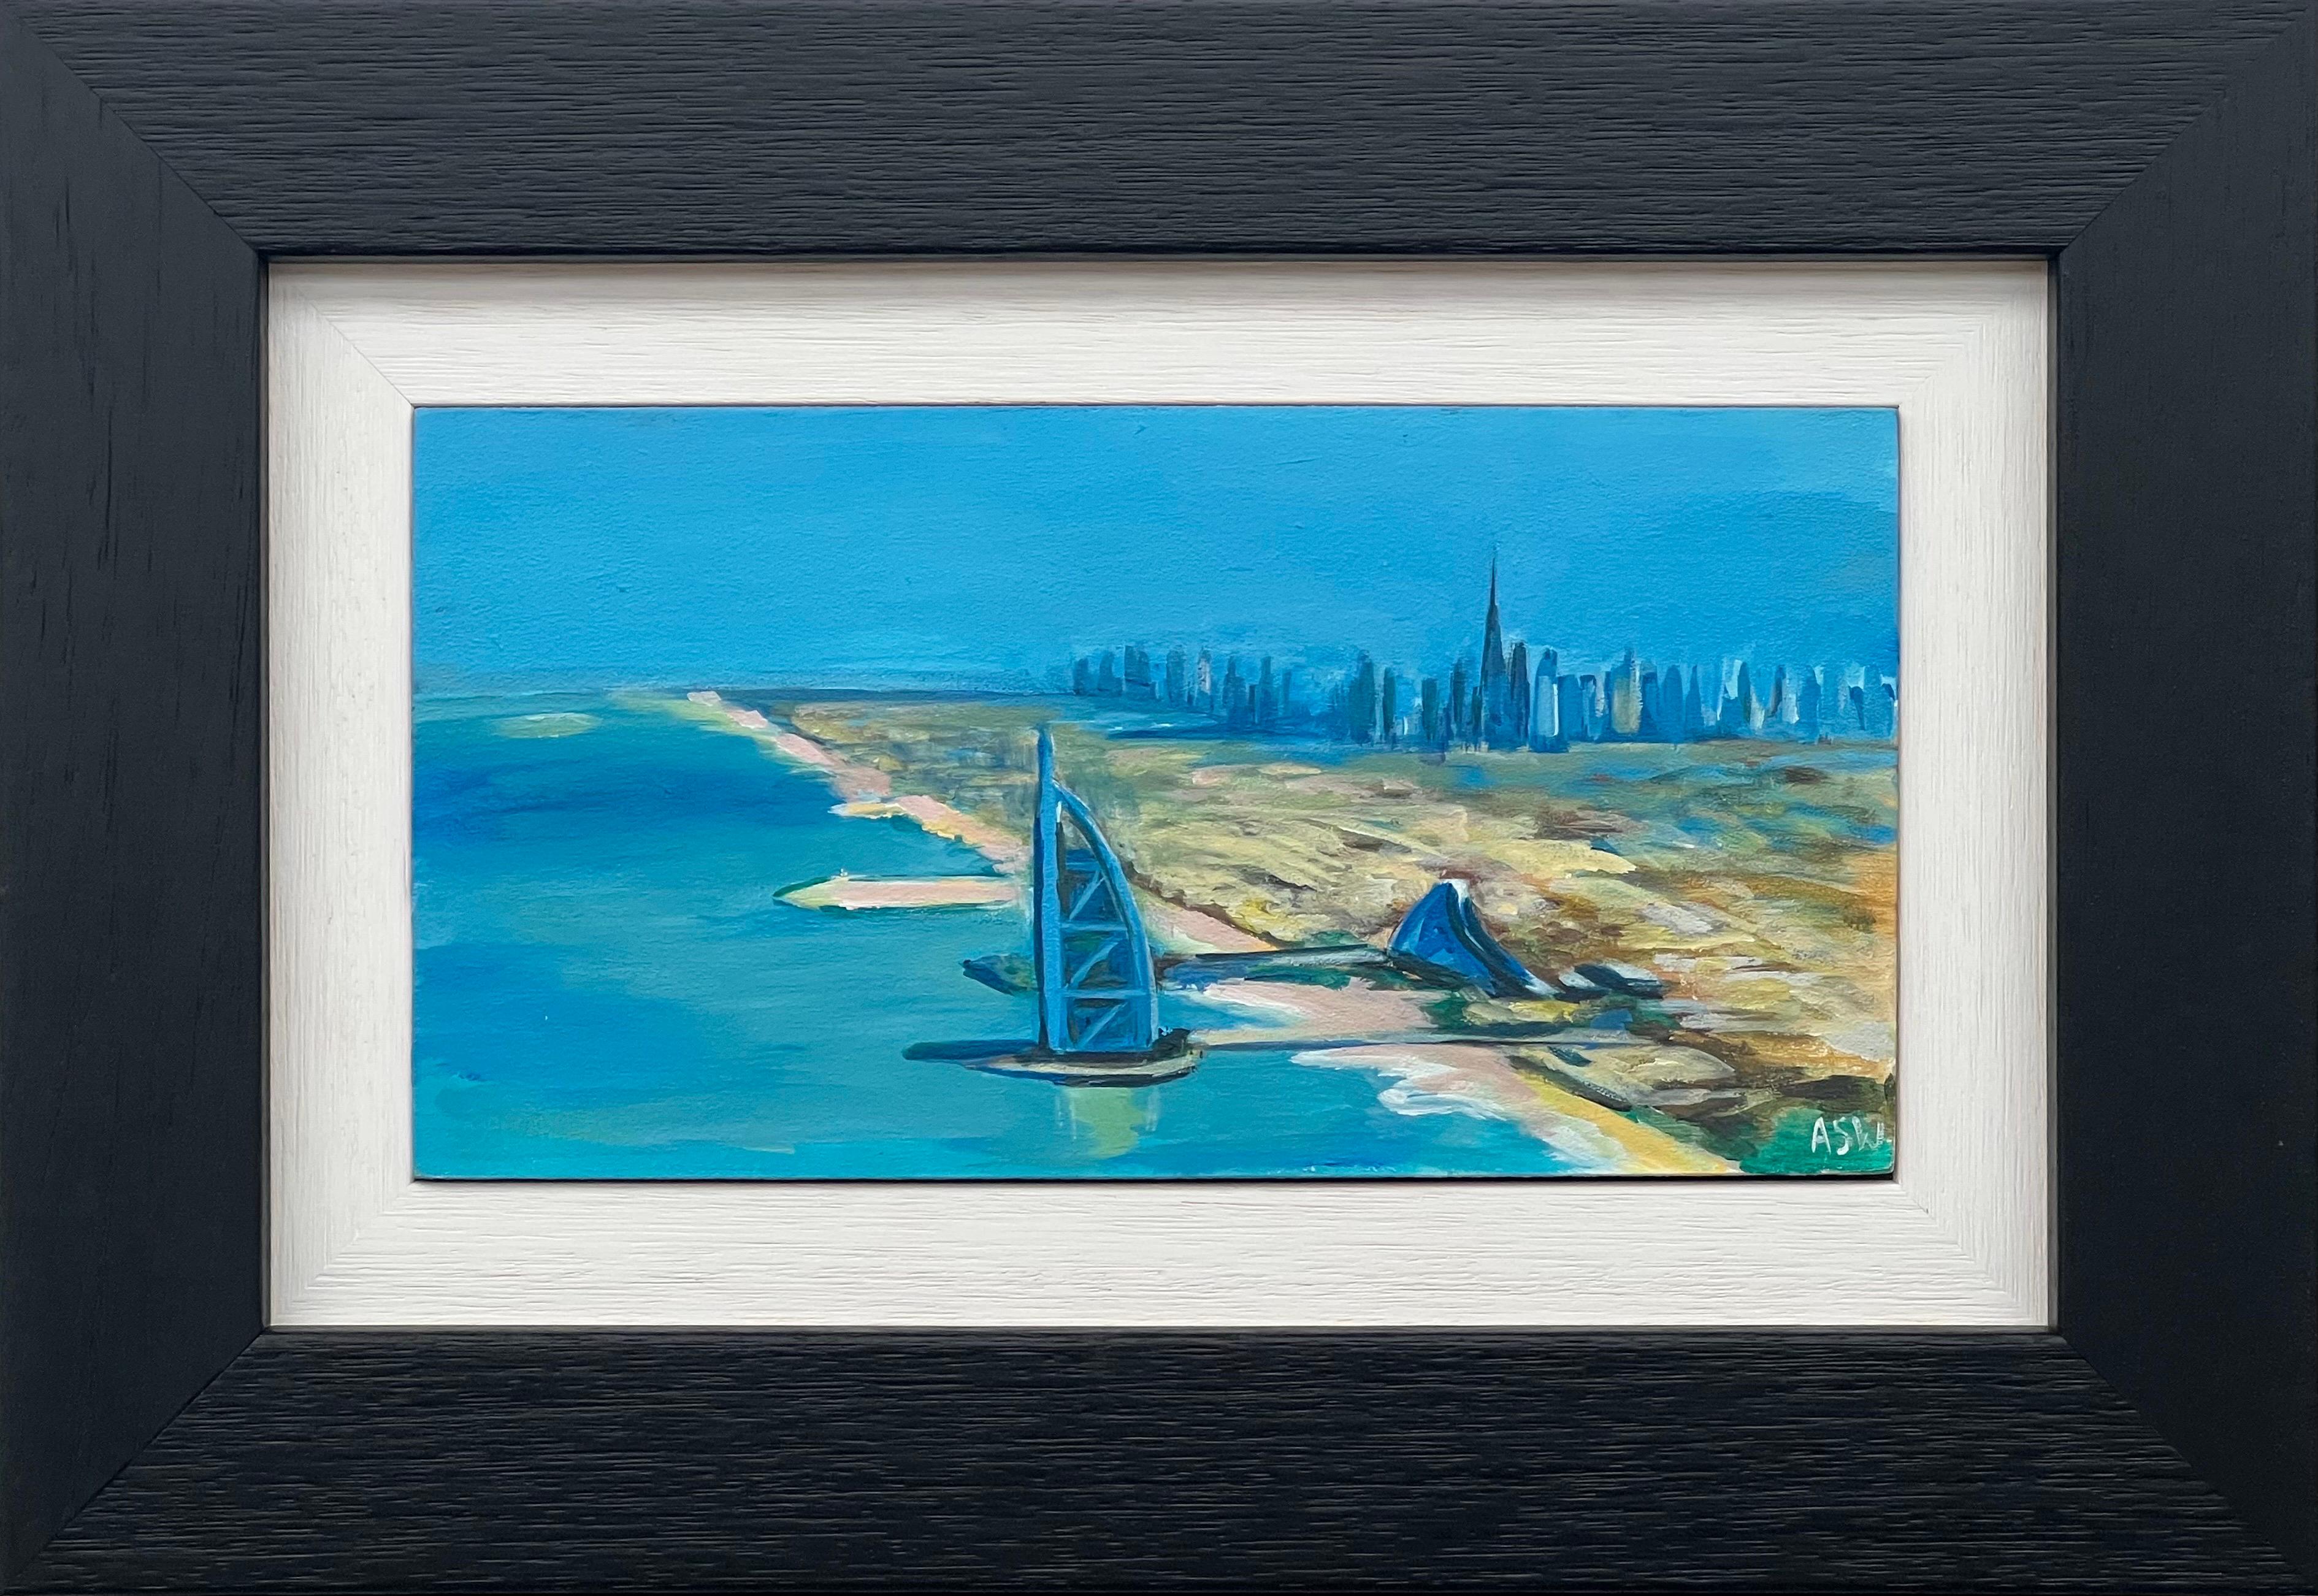 Angela Wakefield Landscape Painting - Miniature Painting of City of Dubai United Arab Emirates UAE by British Artist